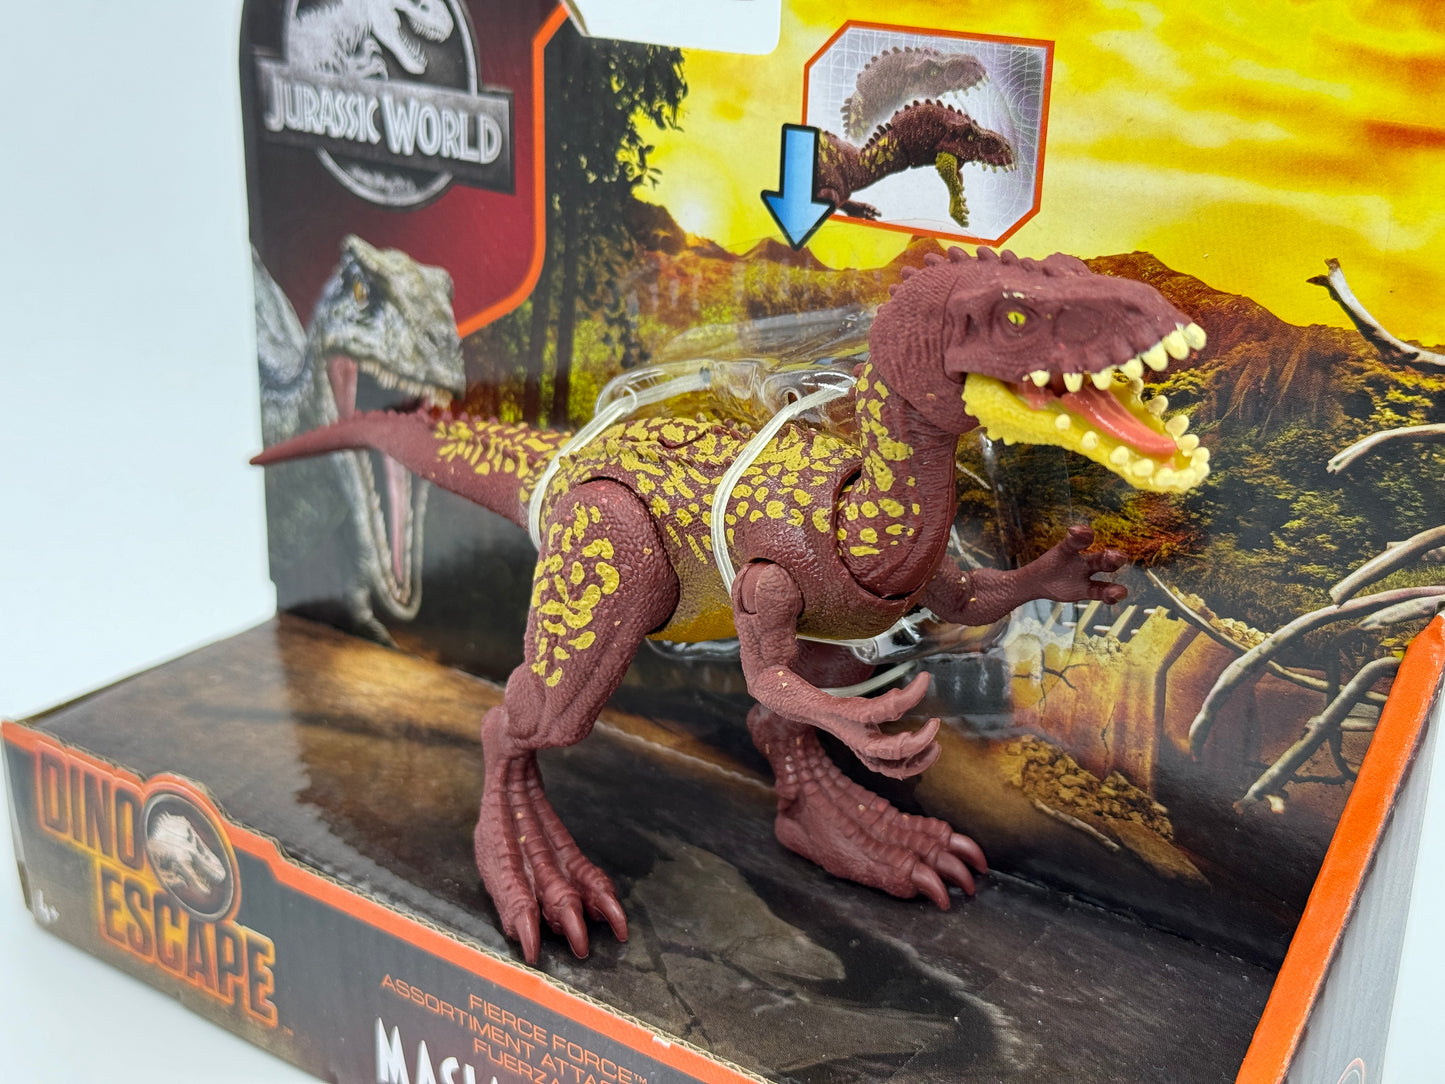 Jurassic World Camp Cretaceous "Masiakasaurus" Dino Escape Fierce Force Netflix